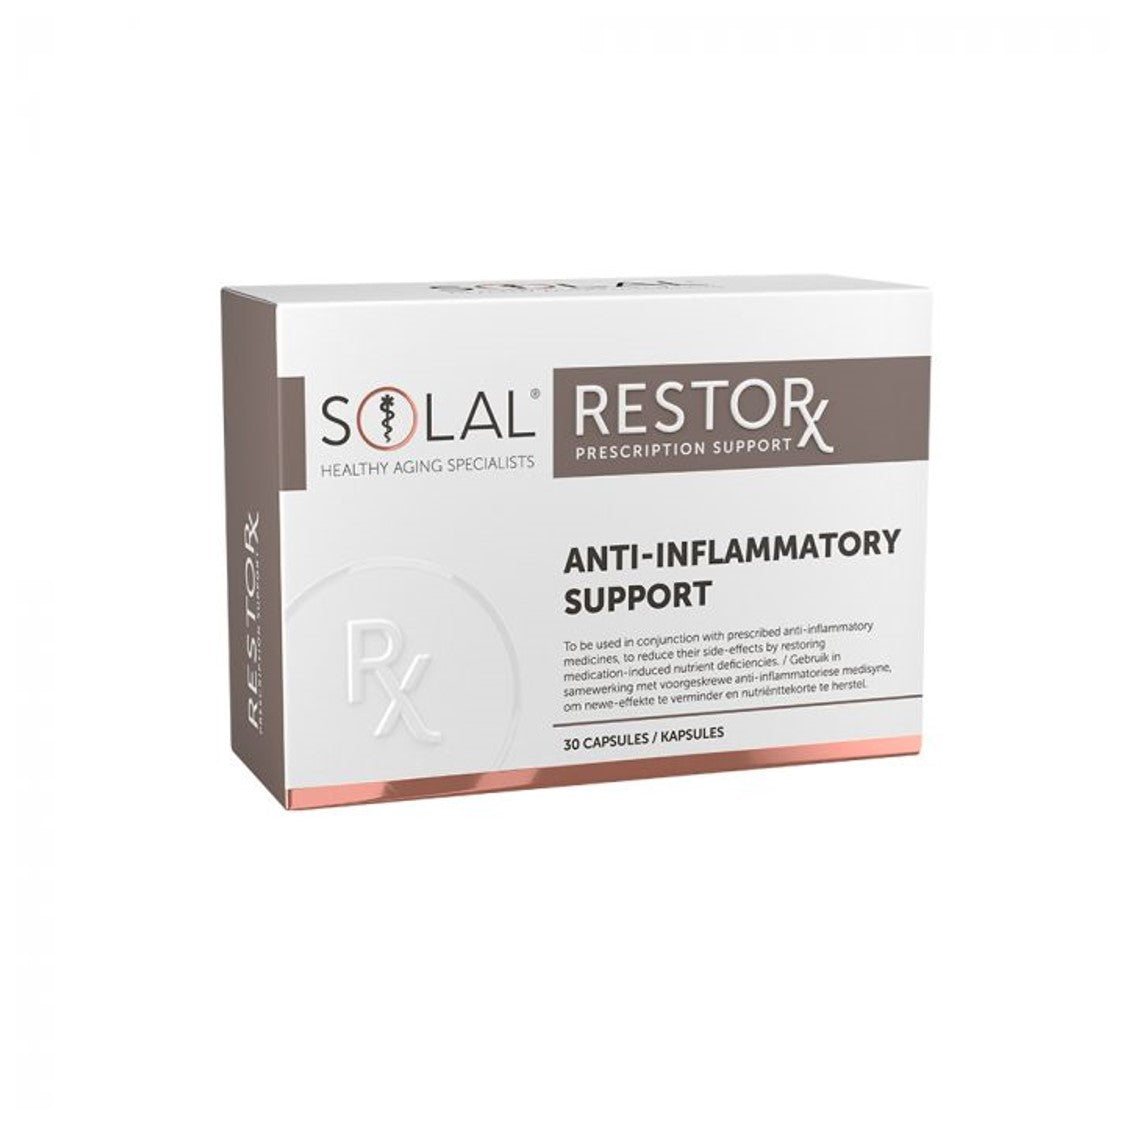 Solal Restorx Anti-Inflammatory Support 30 Capsules